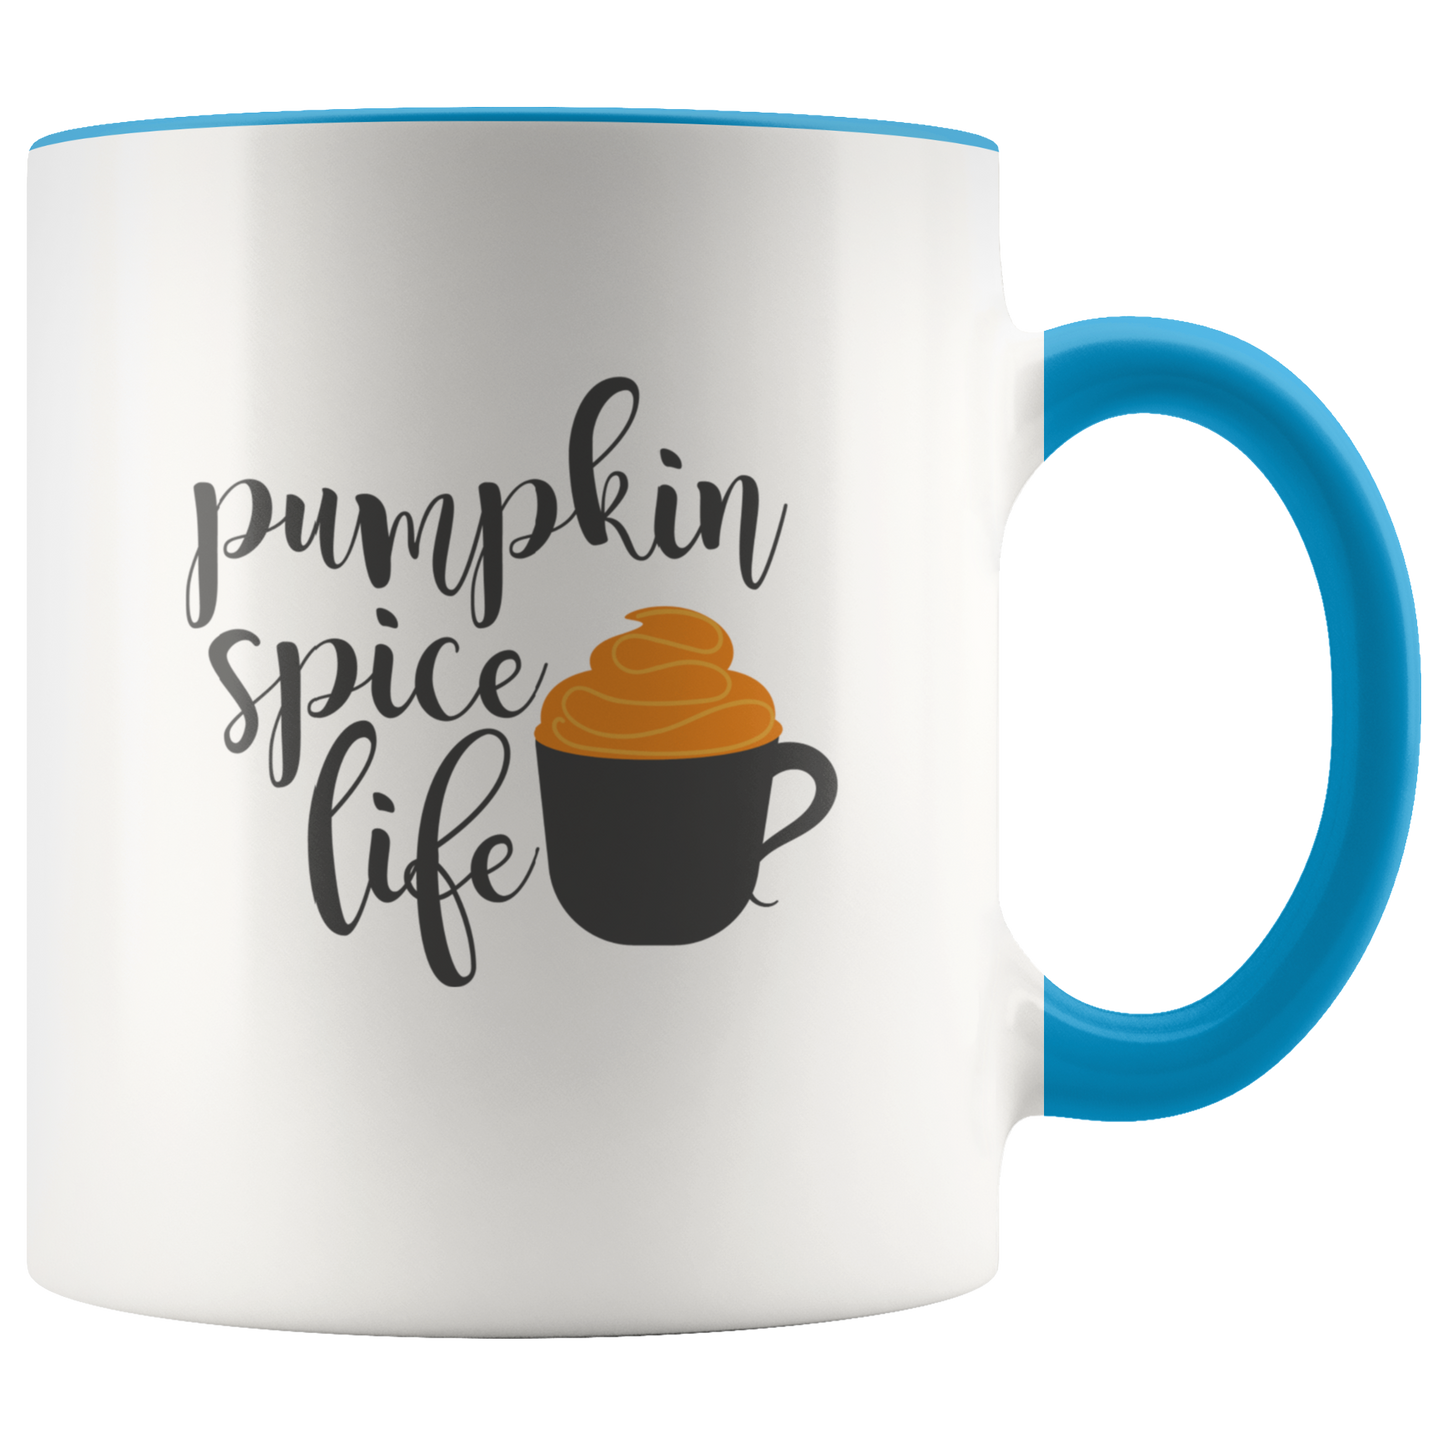 Pumpkin Spice Life Funny Coffee Mug Coffee Lovers Mug Gift Custom Mug Cute Mug Gift